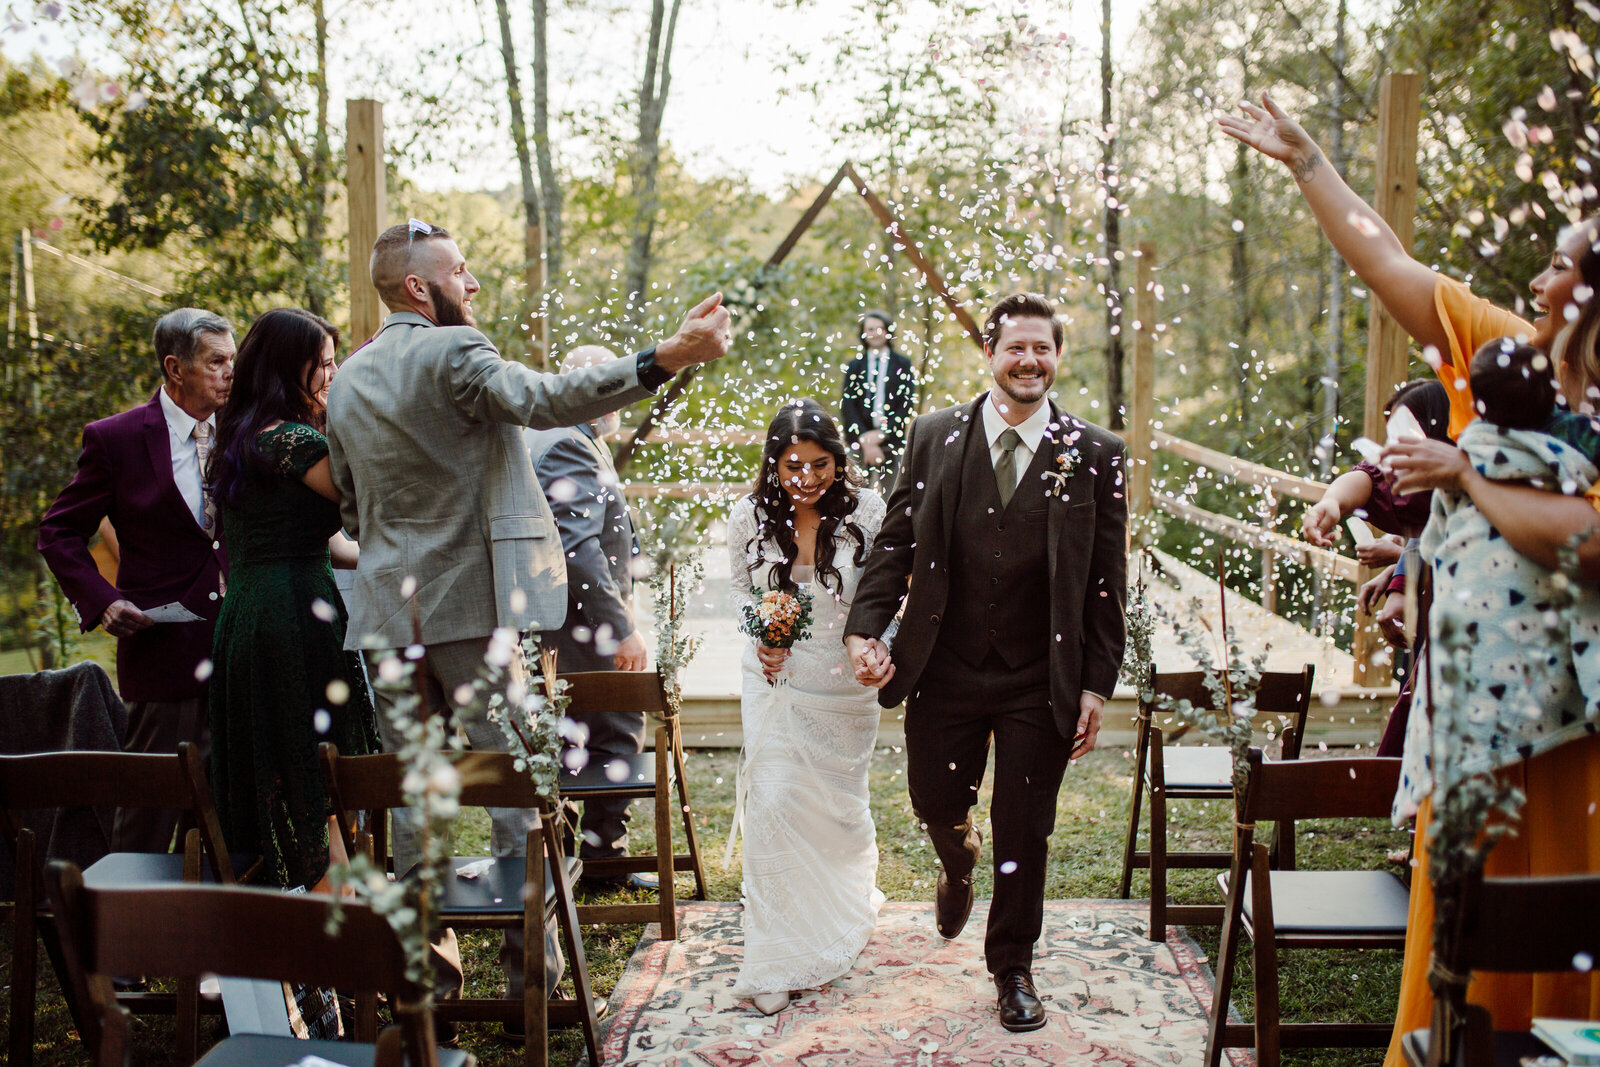 Confetti ceremony exit in a Nashville backyard intimate wedding